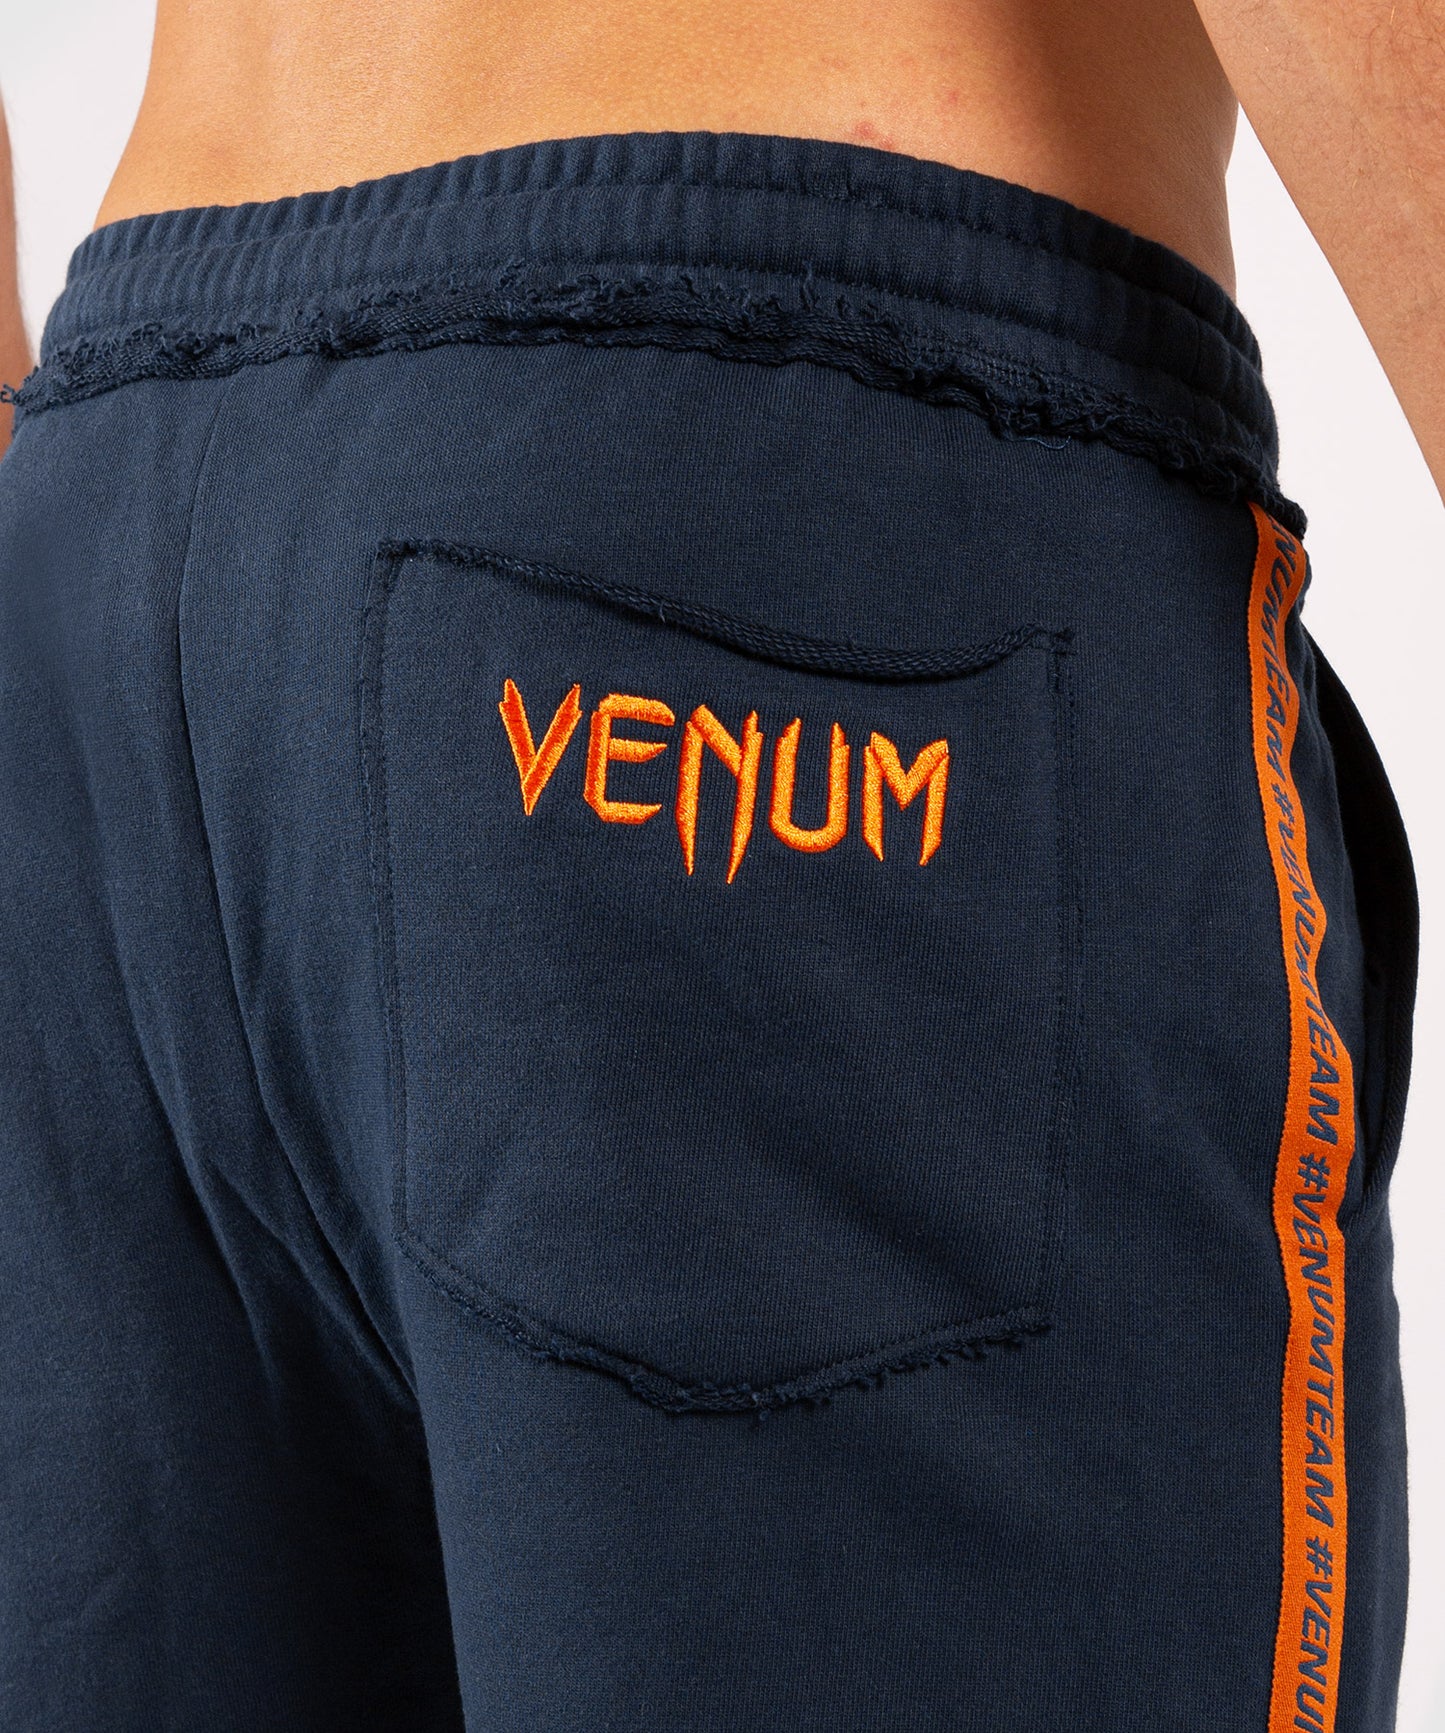 Venum Cutback 2.0 Cotton Shorts